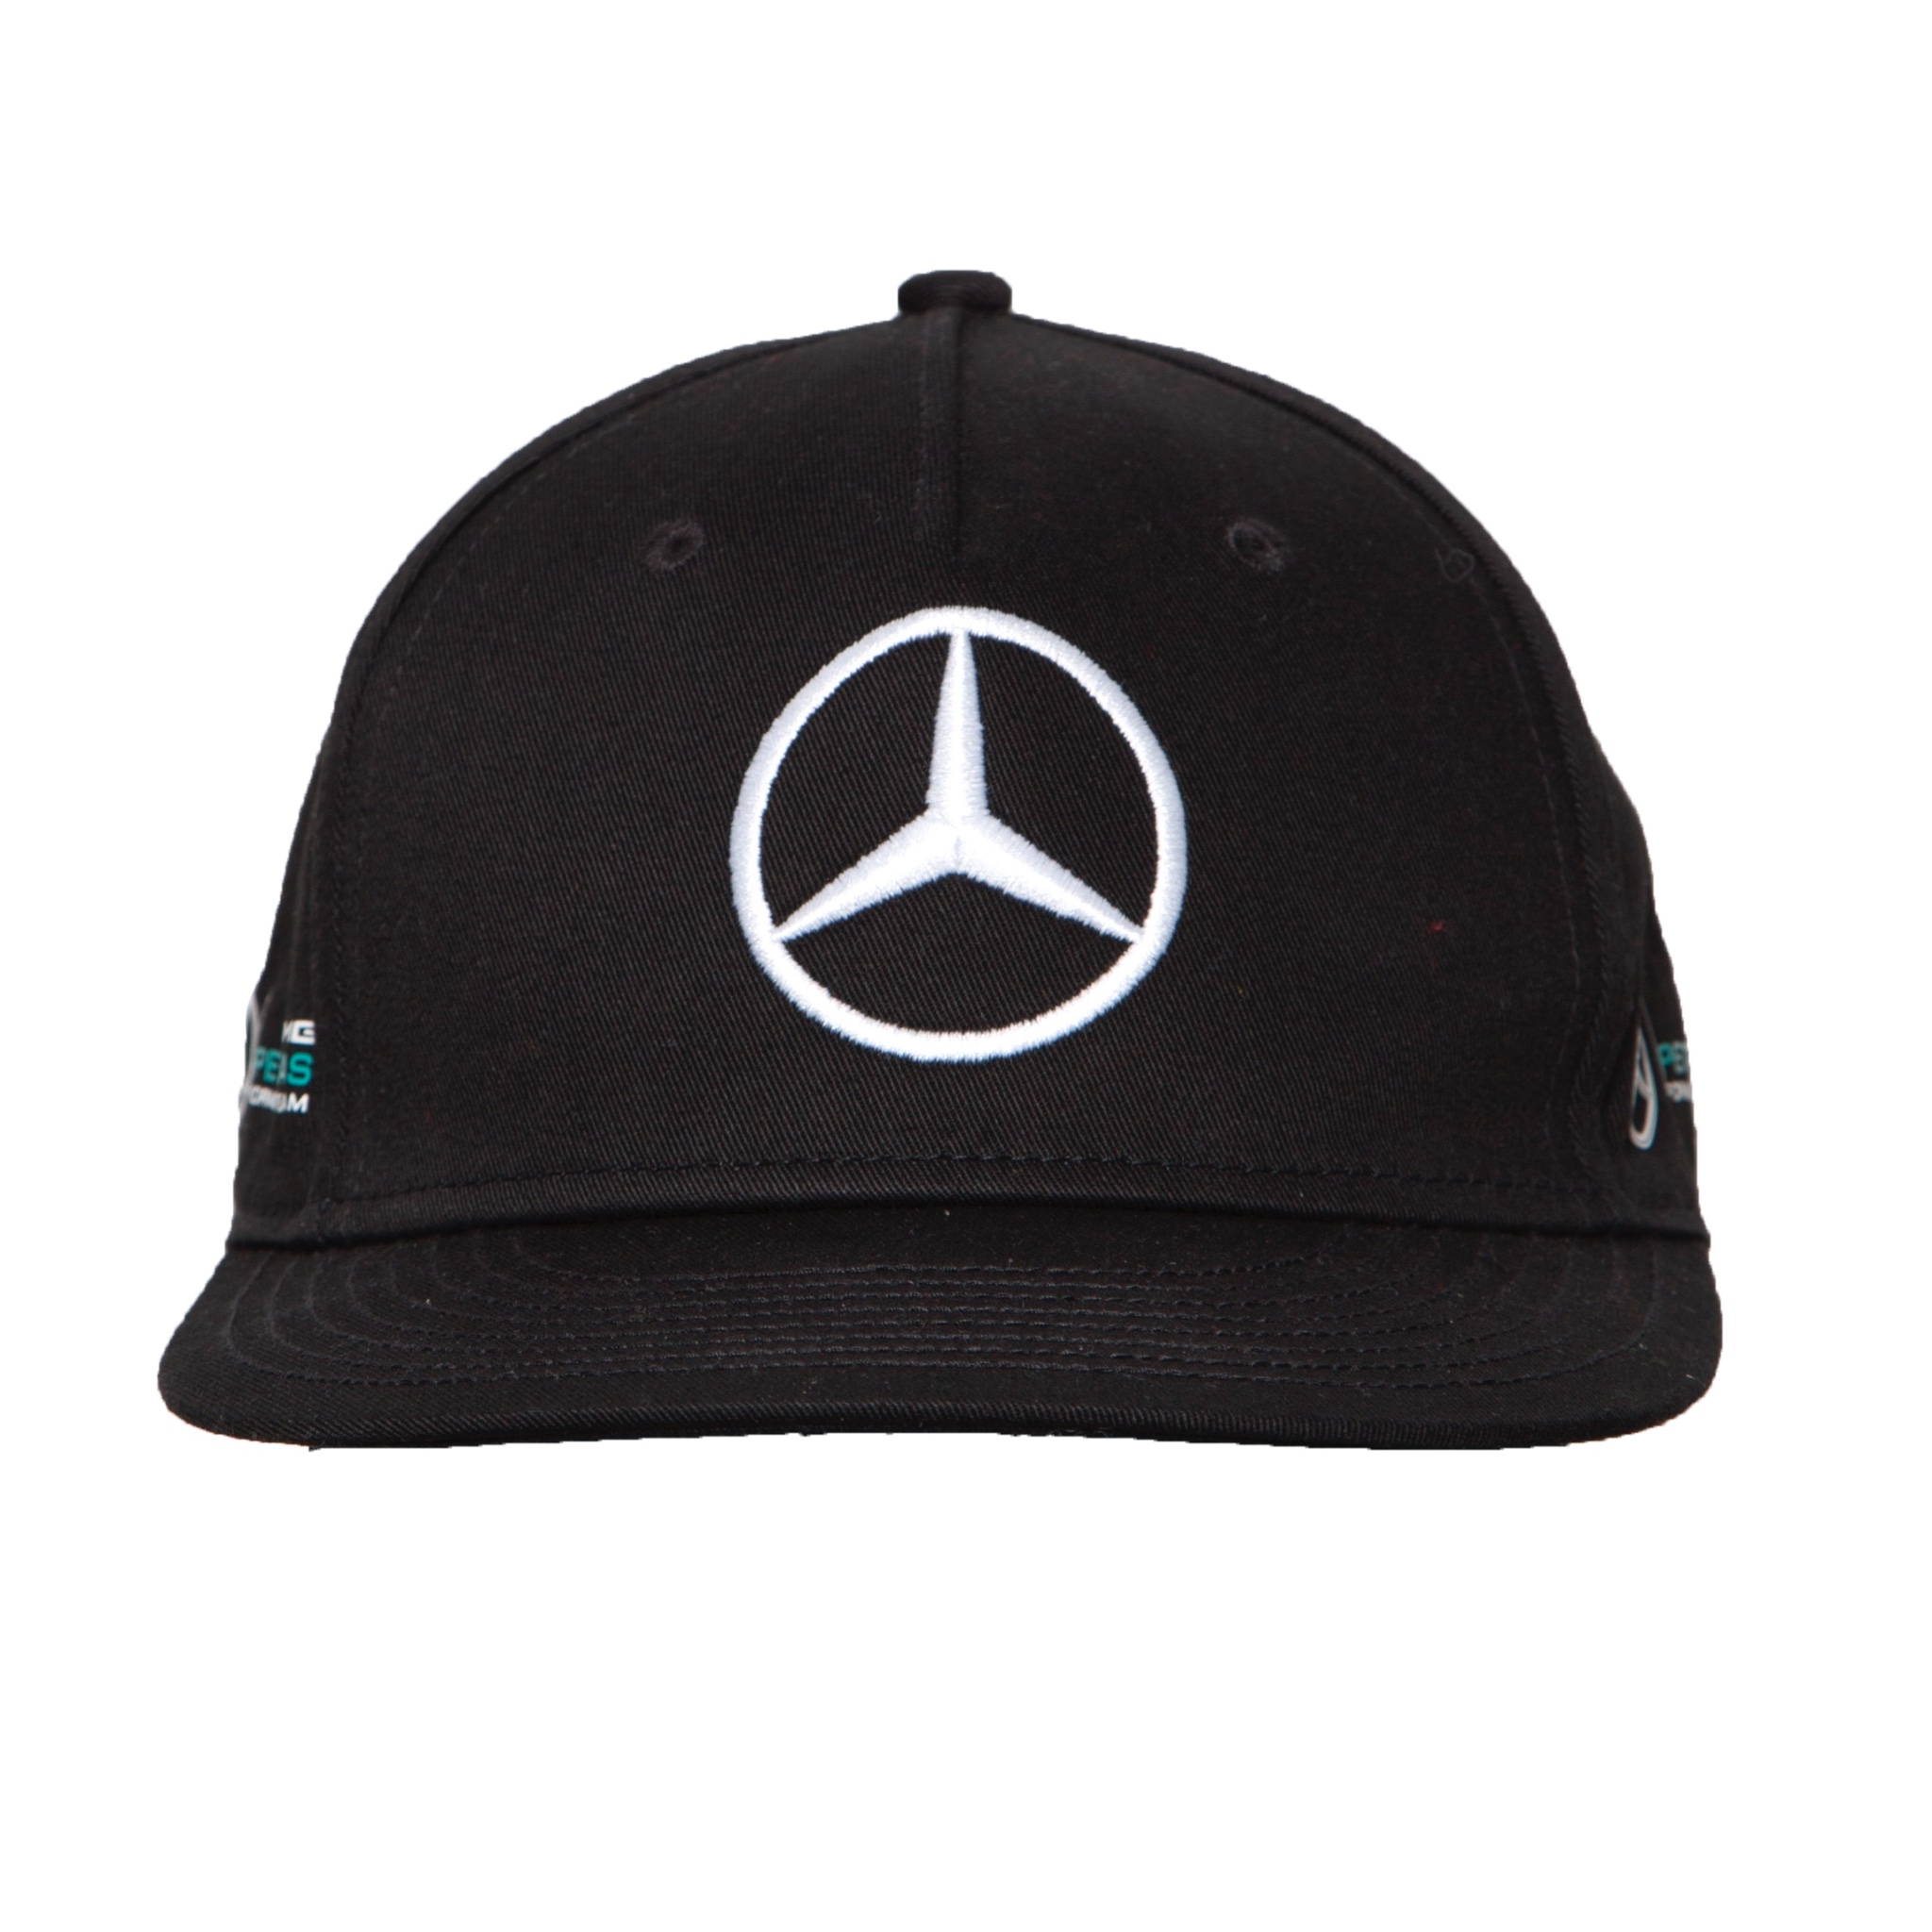 Official Mercedes Hamilton Cap Black - Monaco Addict